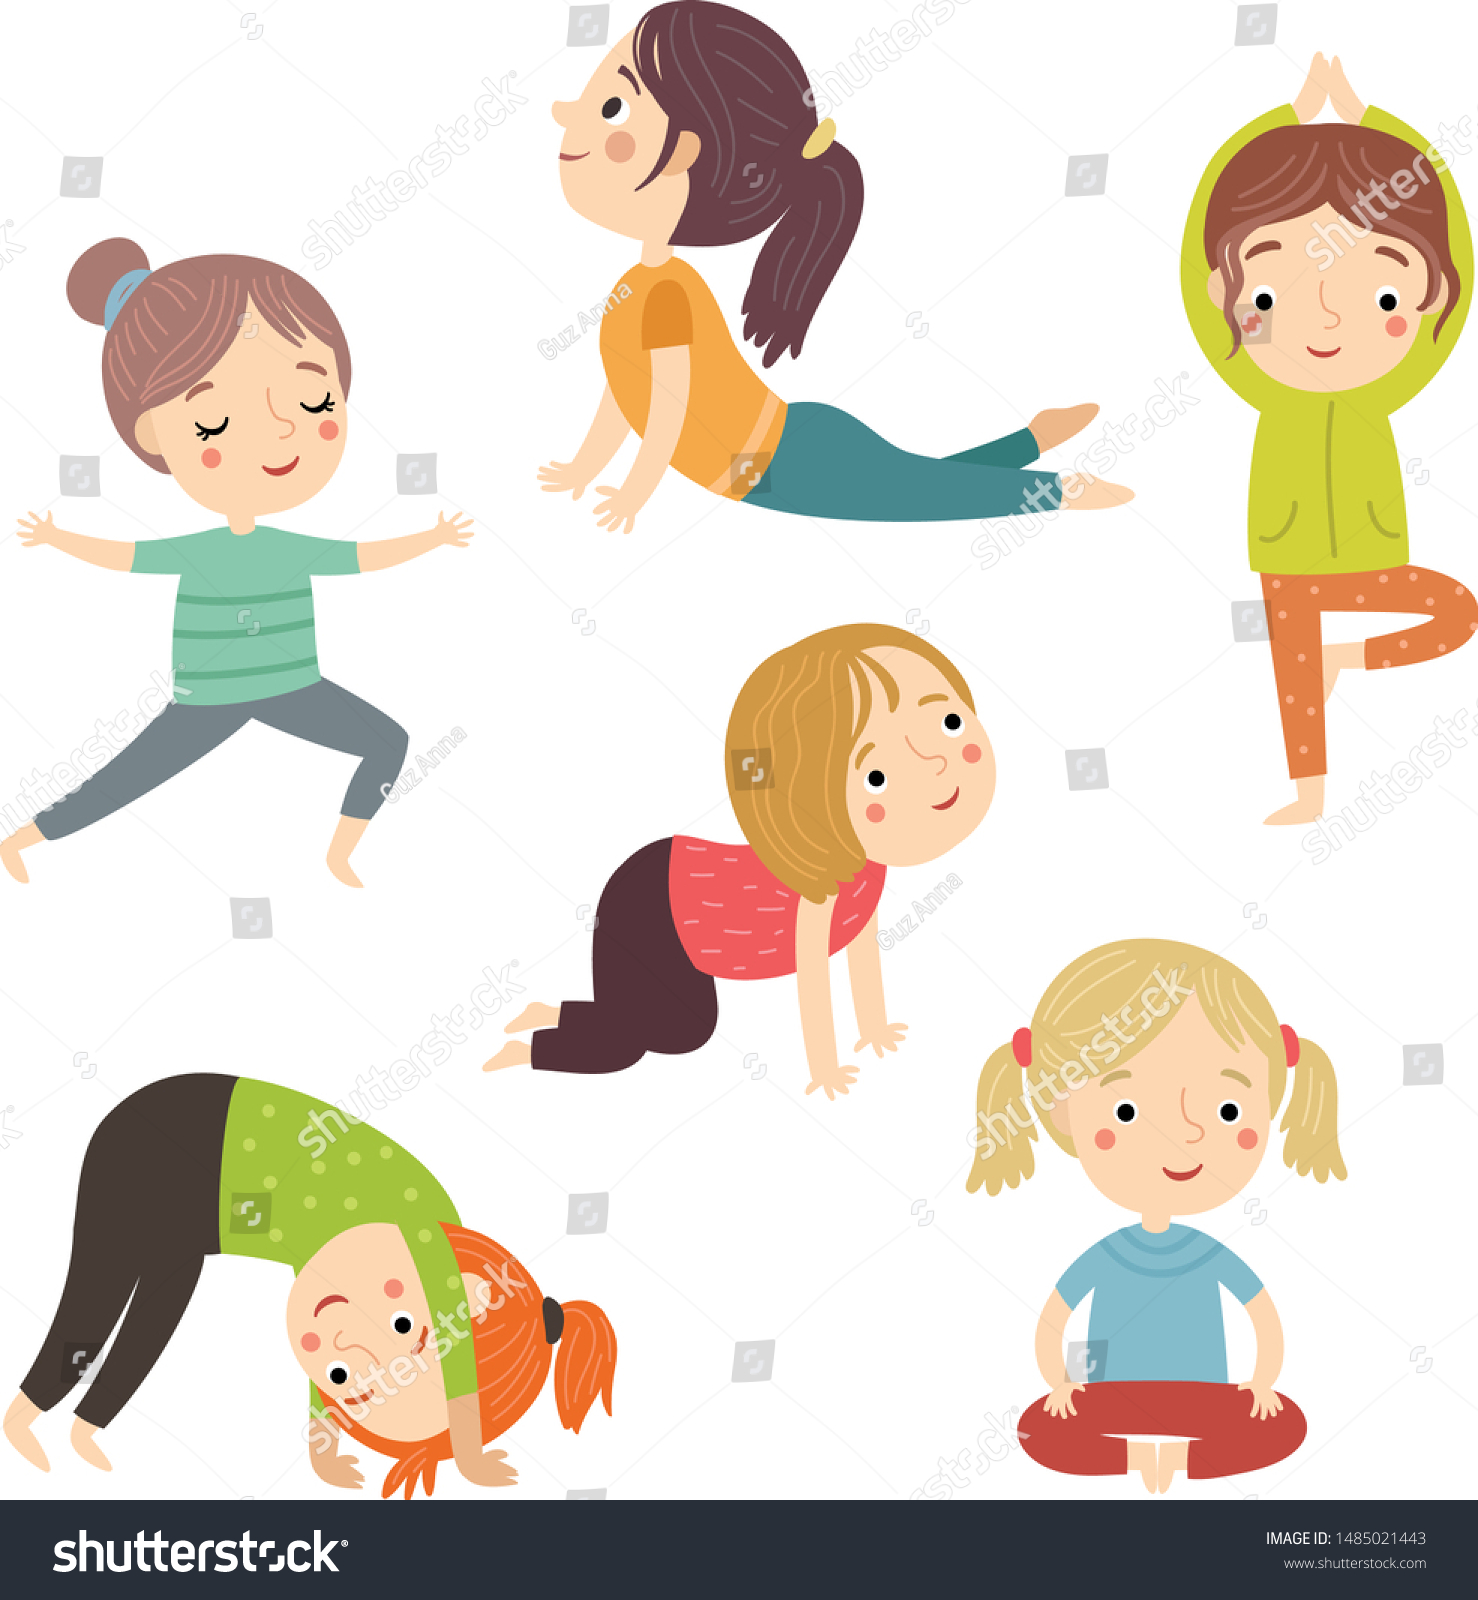 1,080 Little girl doing yoga Stock Illustrations, Images & Vectors ...